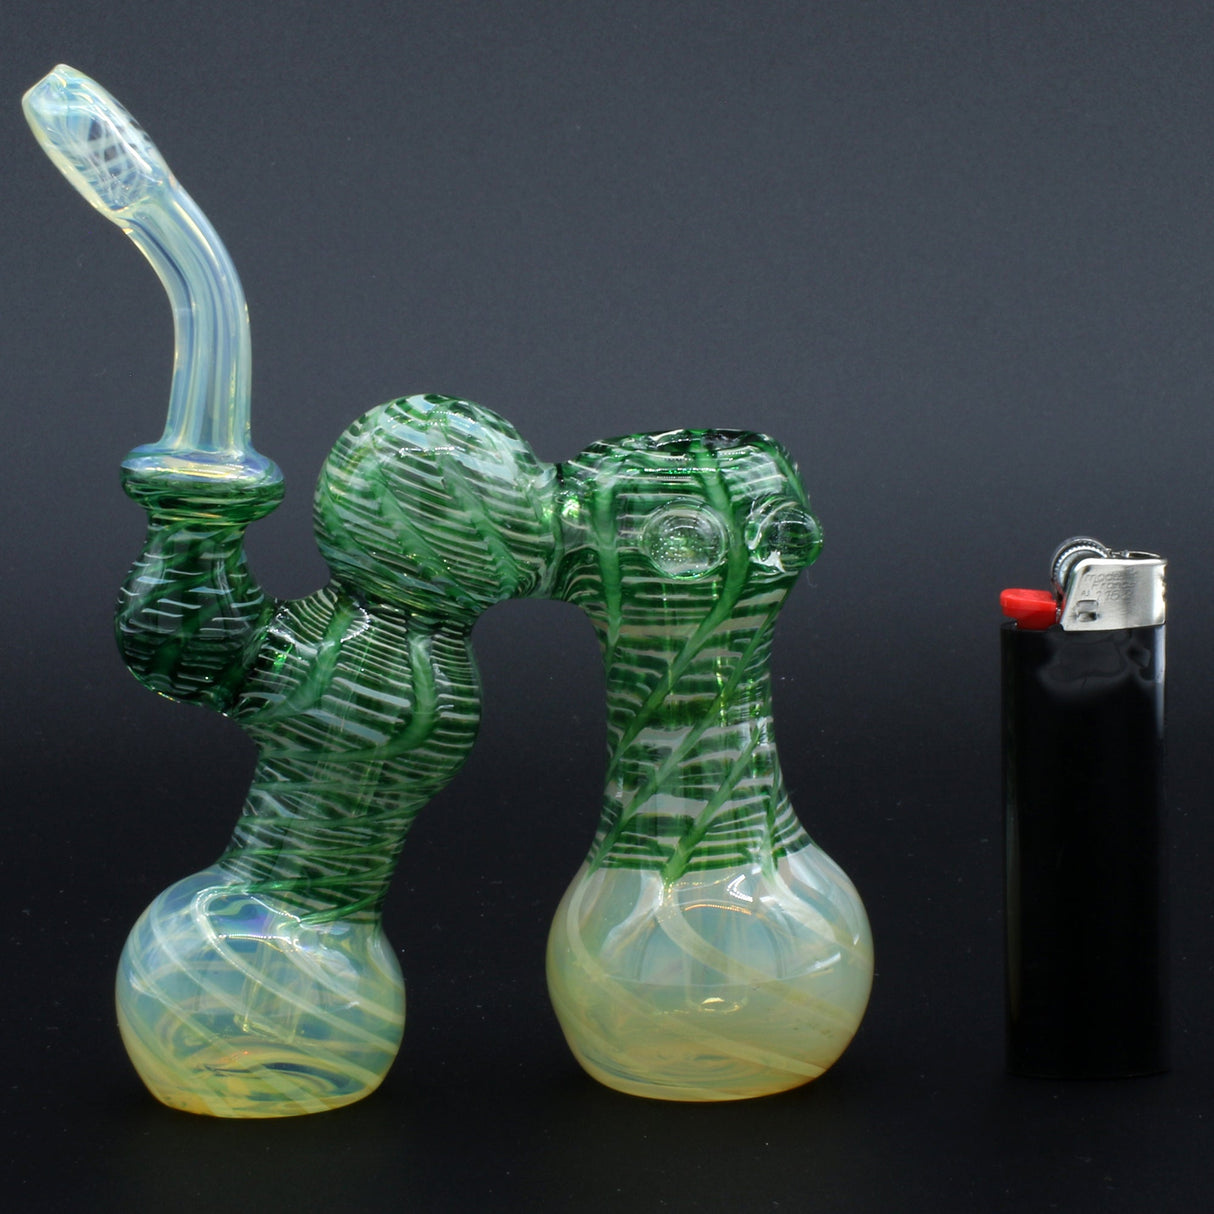 Clayball Glass "Dub-Bubb" Sherlock Double Bubbler with intricate bubble design, side view